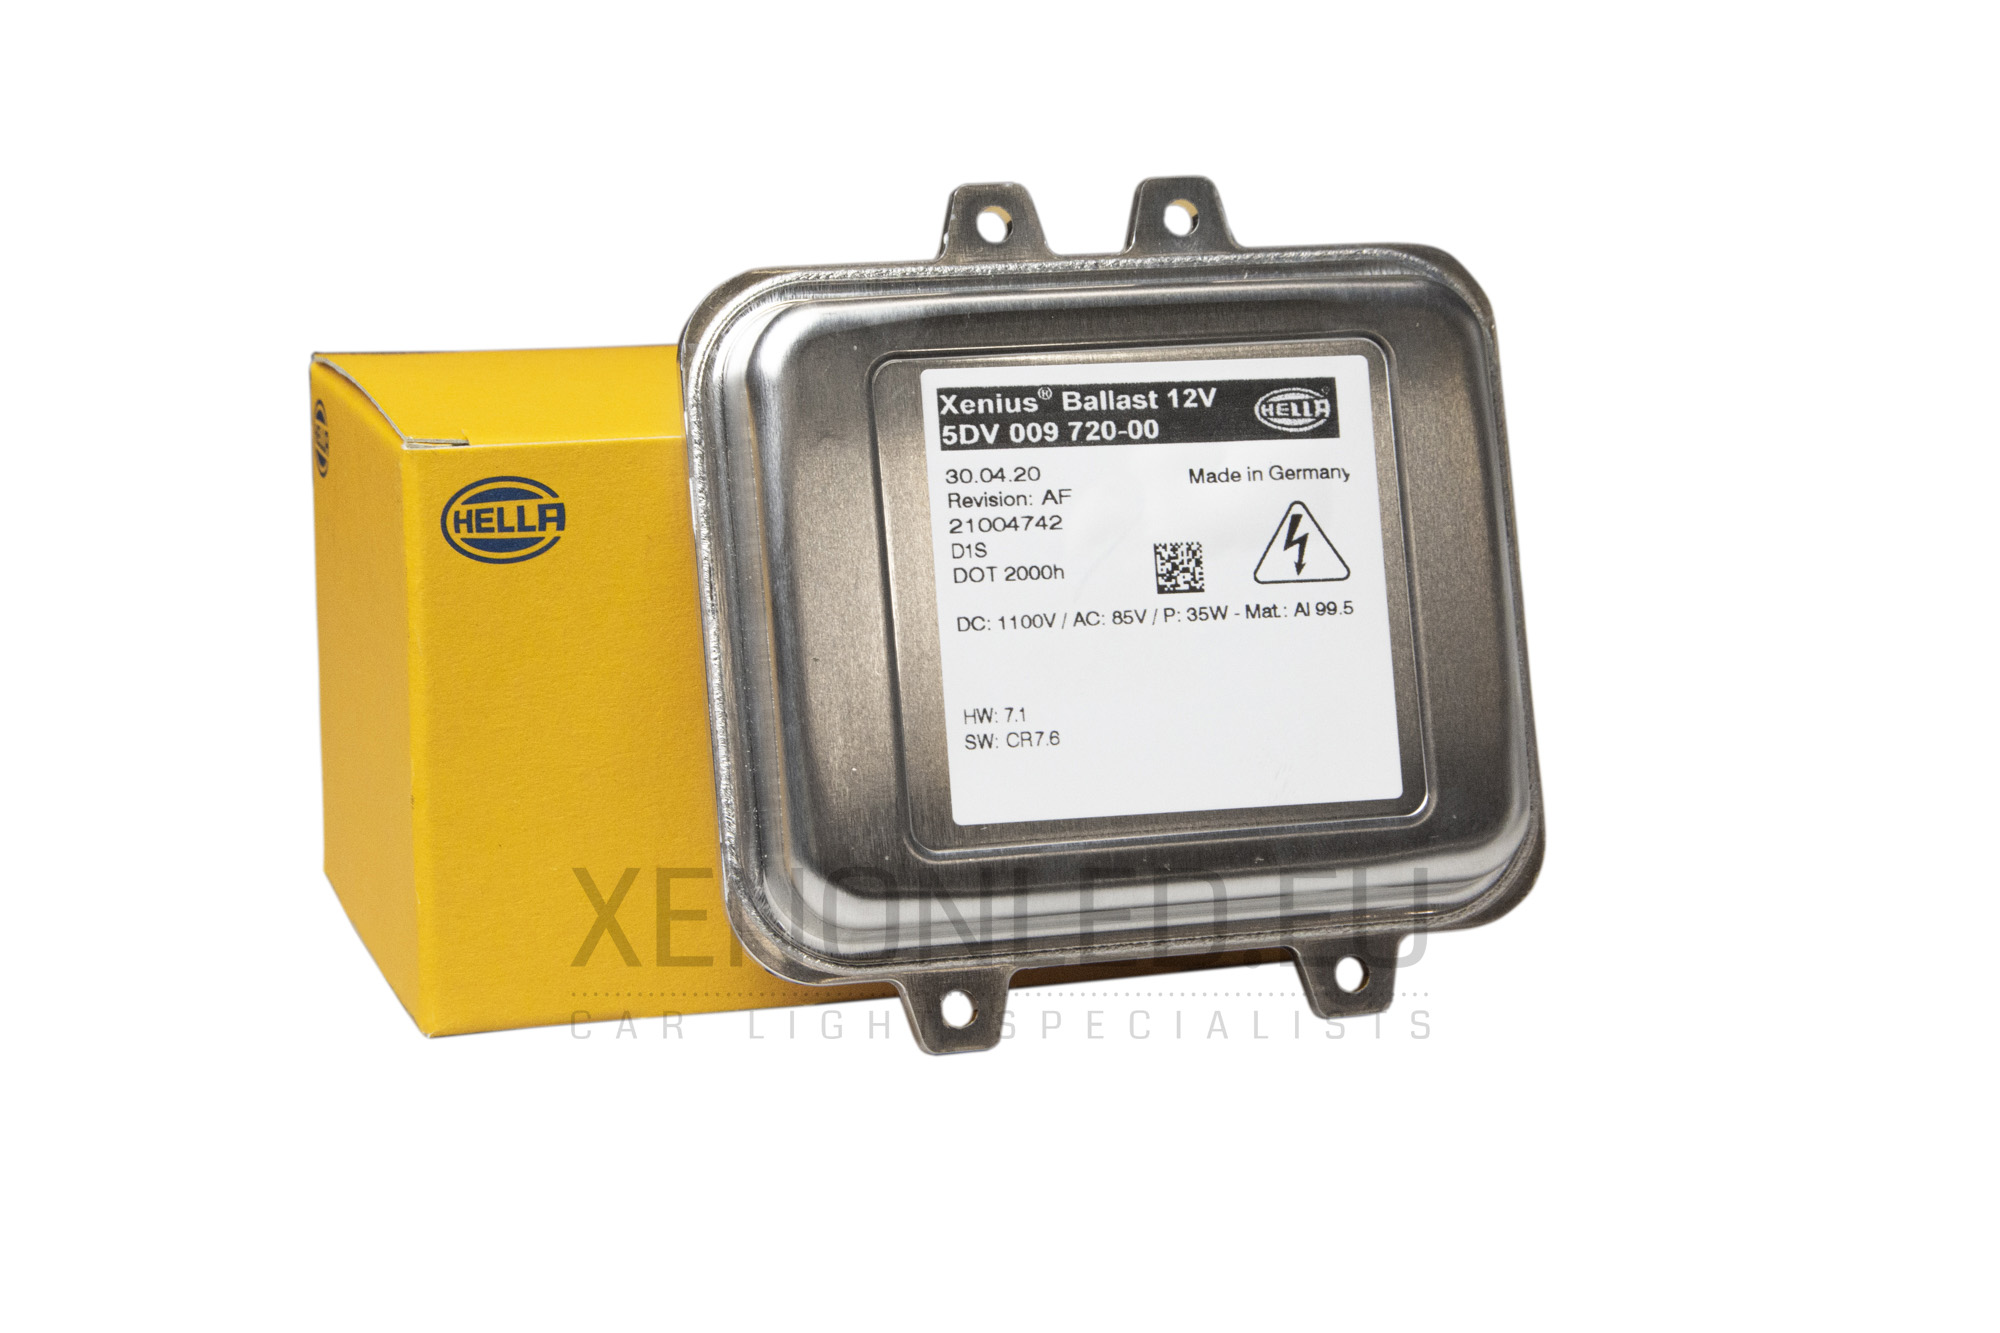 Converter xenon opel insignia 5dv009 720-00 - Online catalog ❱ XDALYS